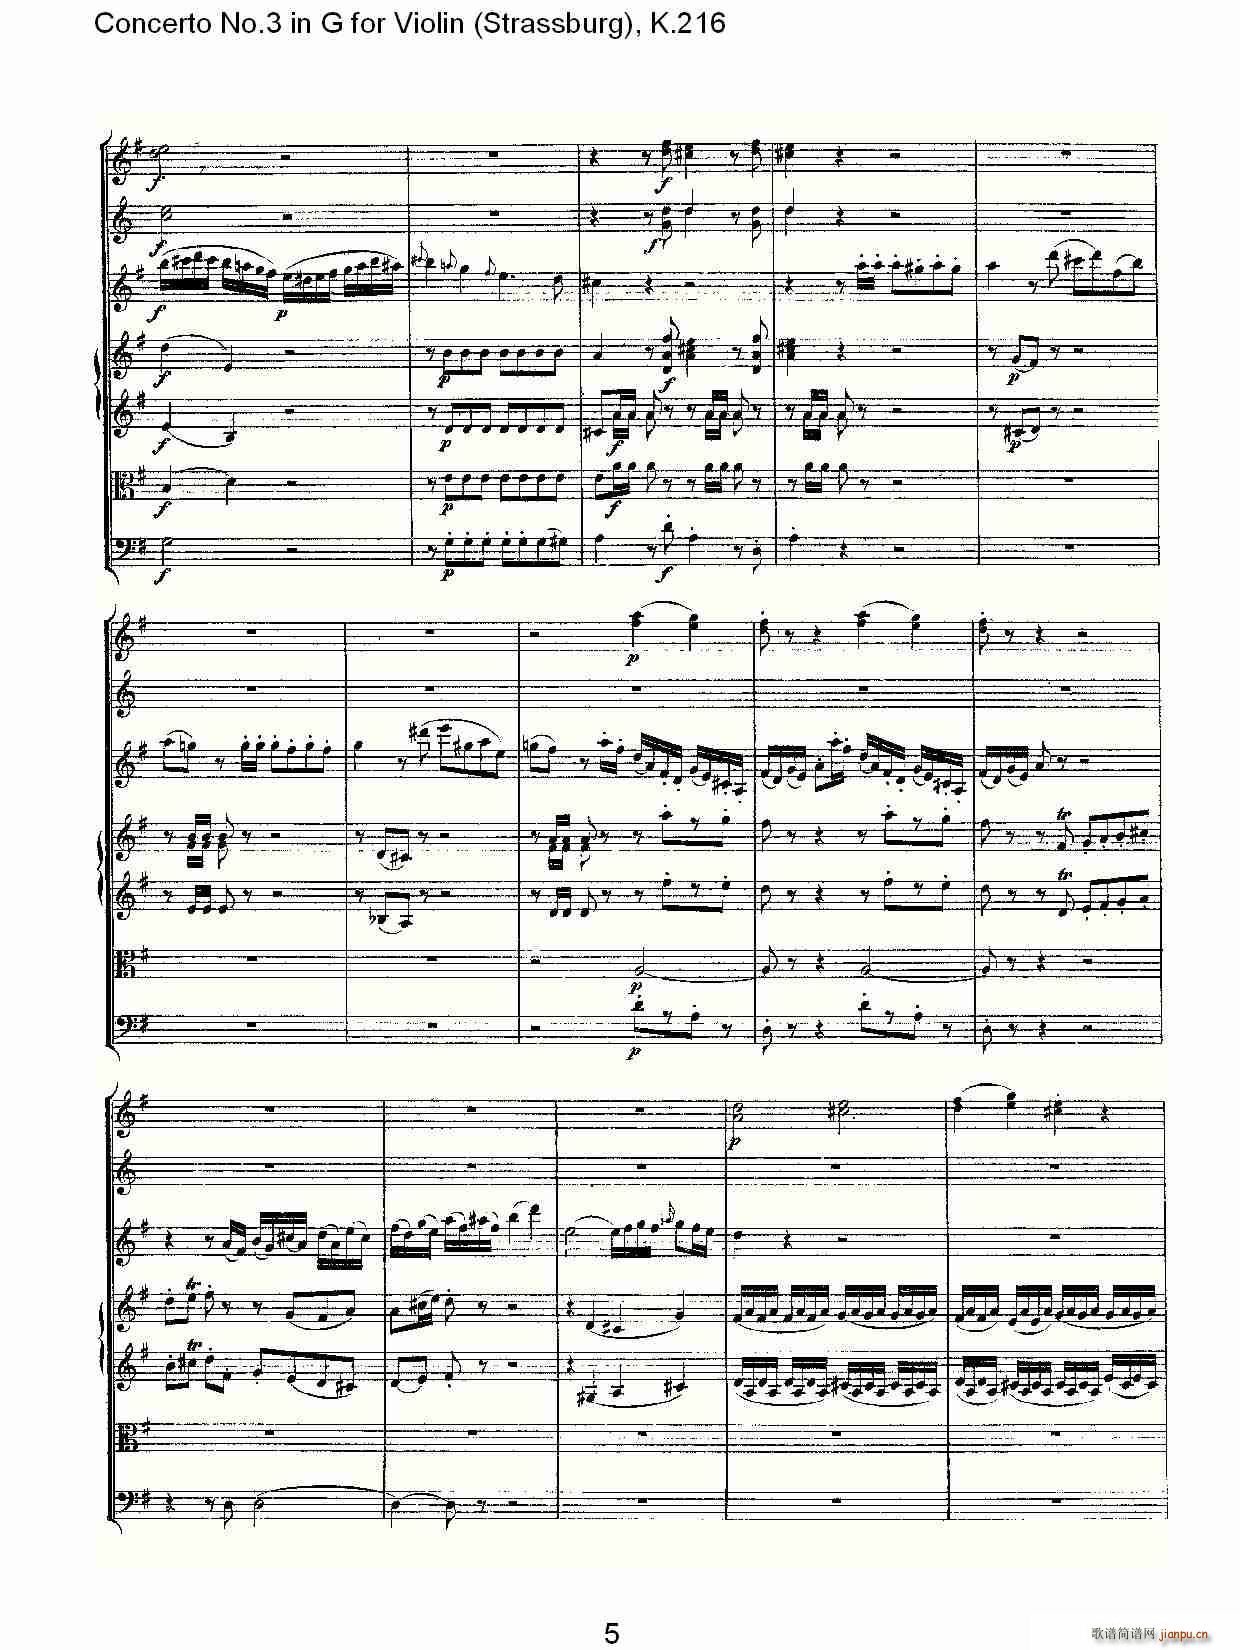 Concerto No.3 in G for Violin K.216(С)5